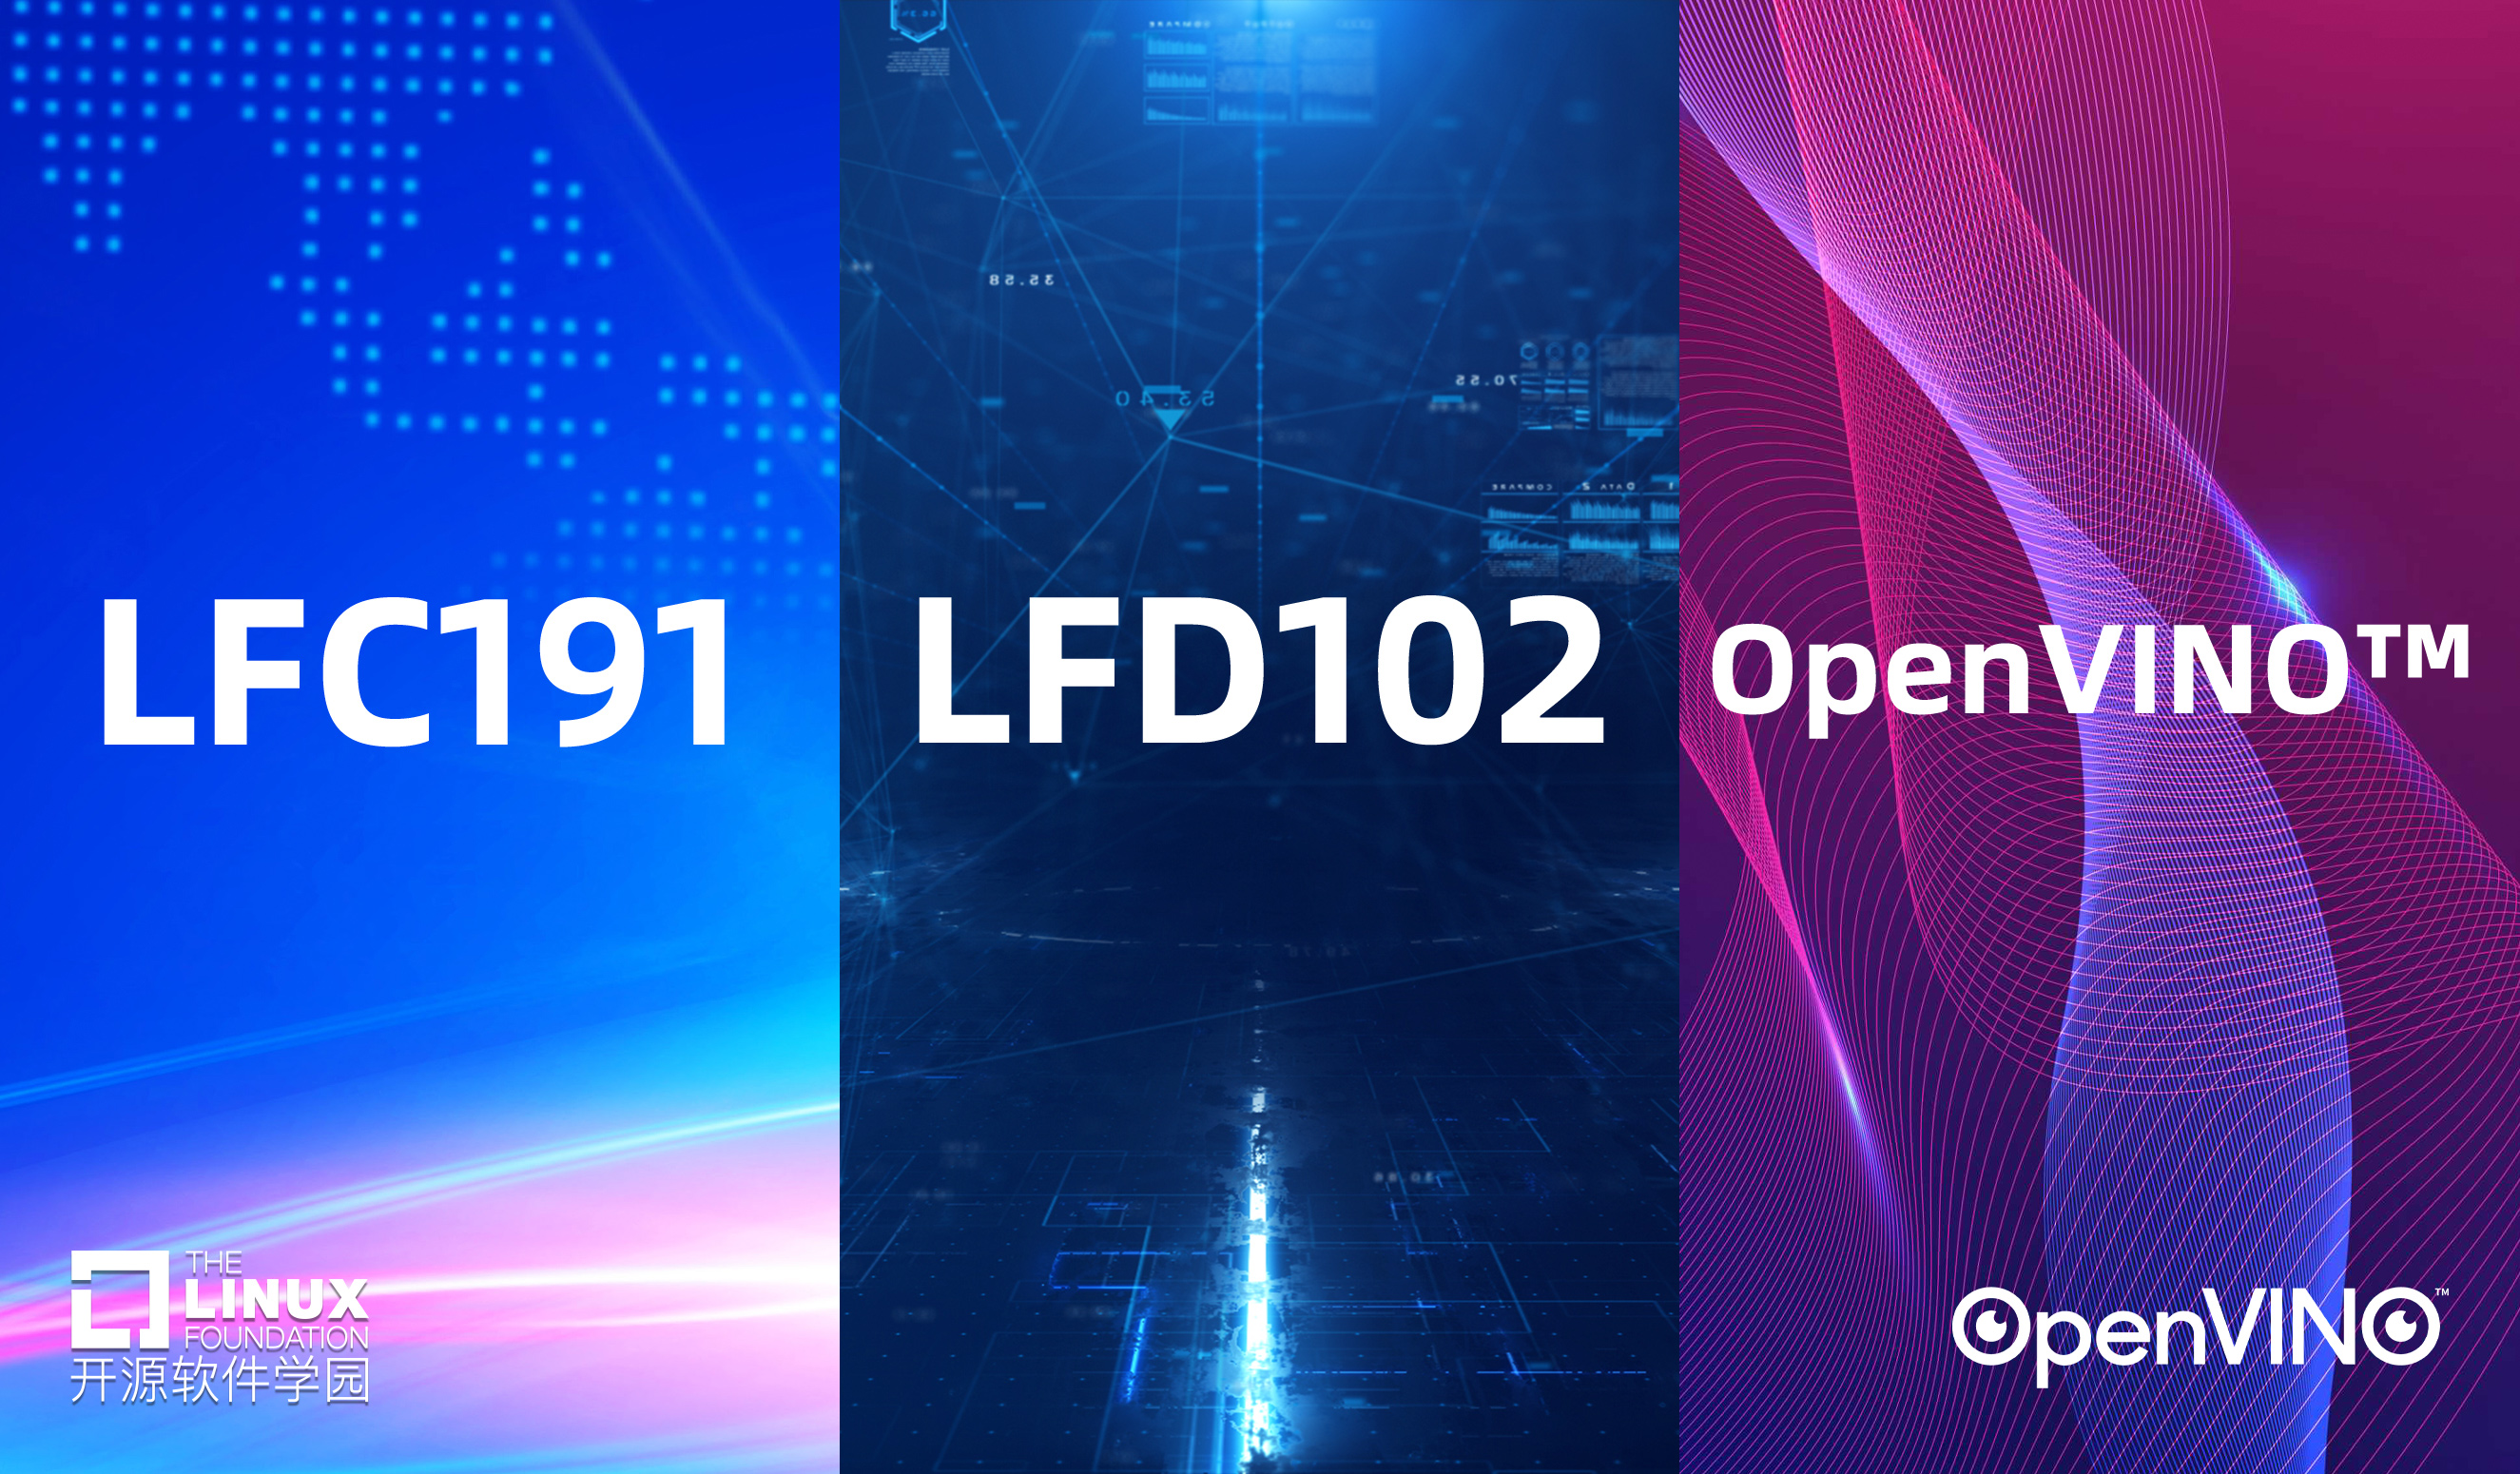 LFD102&LFC191&OpenVINO™